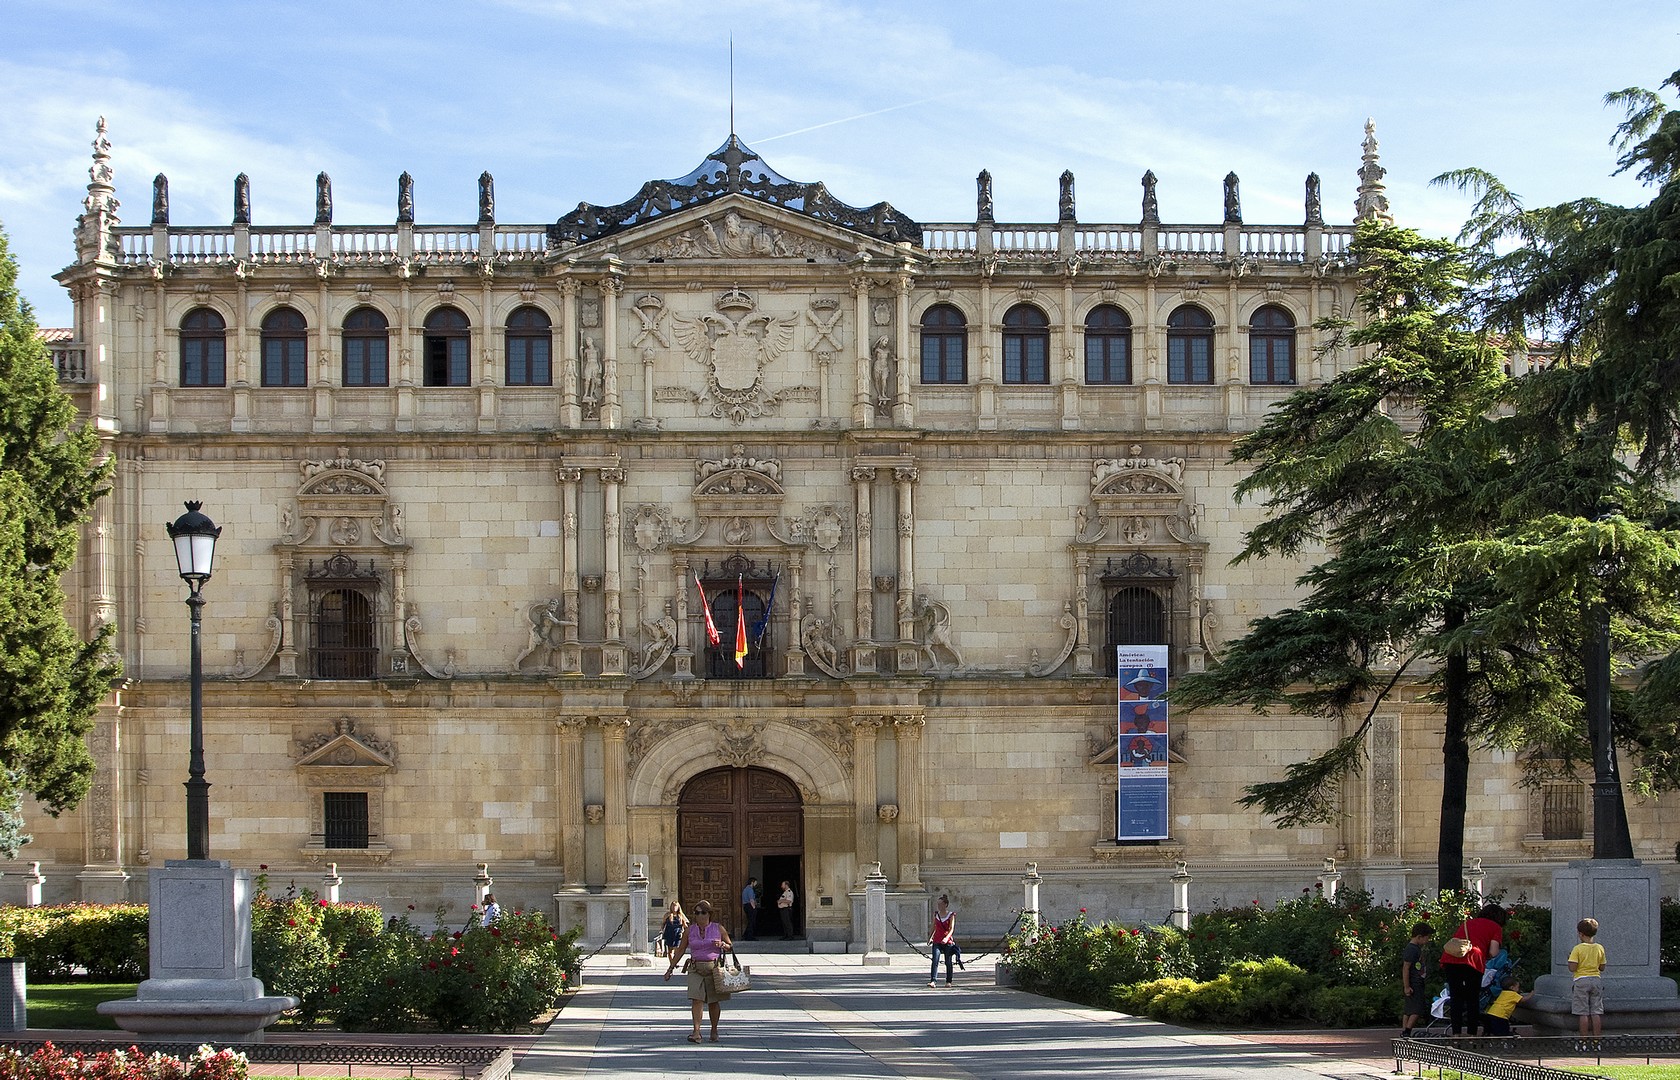  'Façade of San Ildefonso College, Alcalá de Henares '